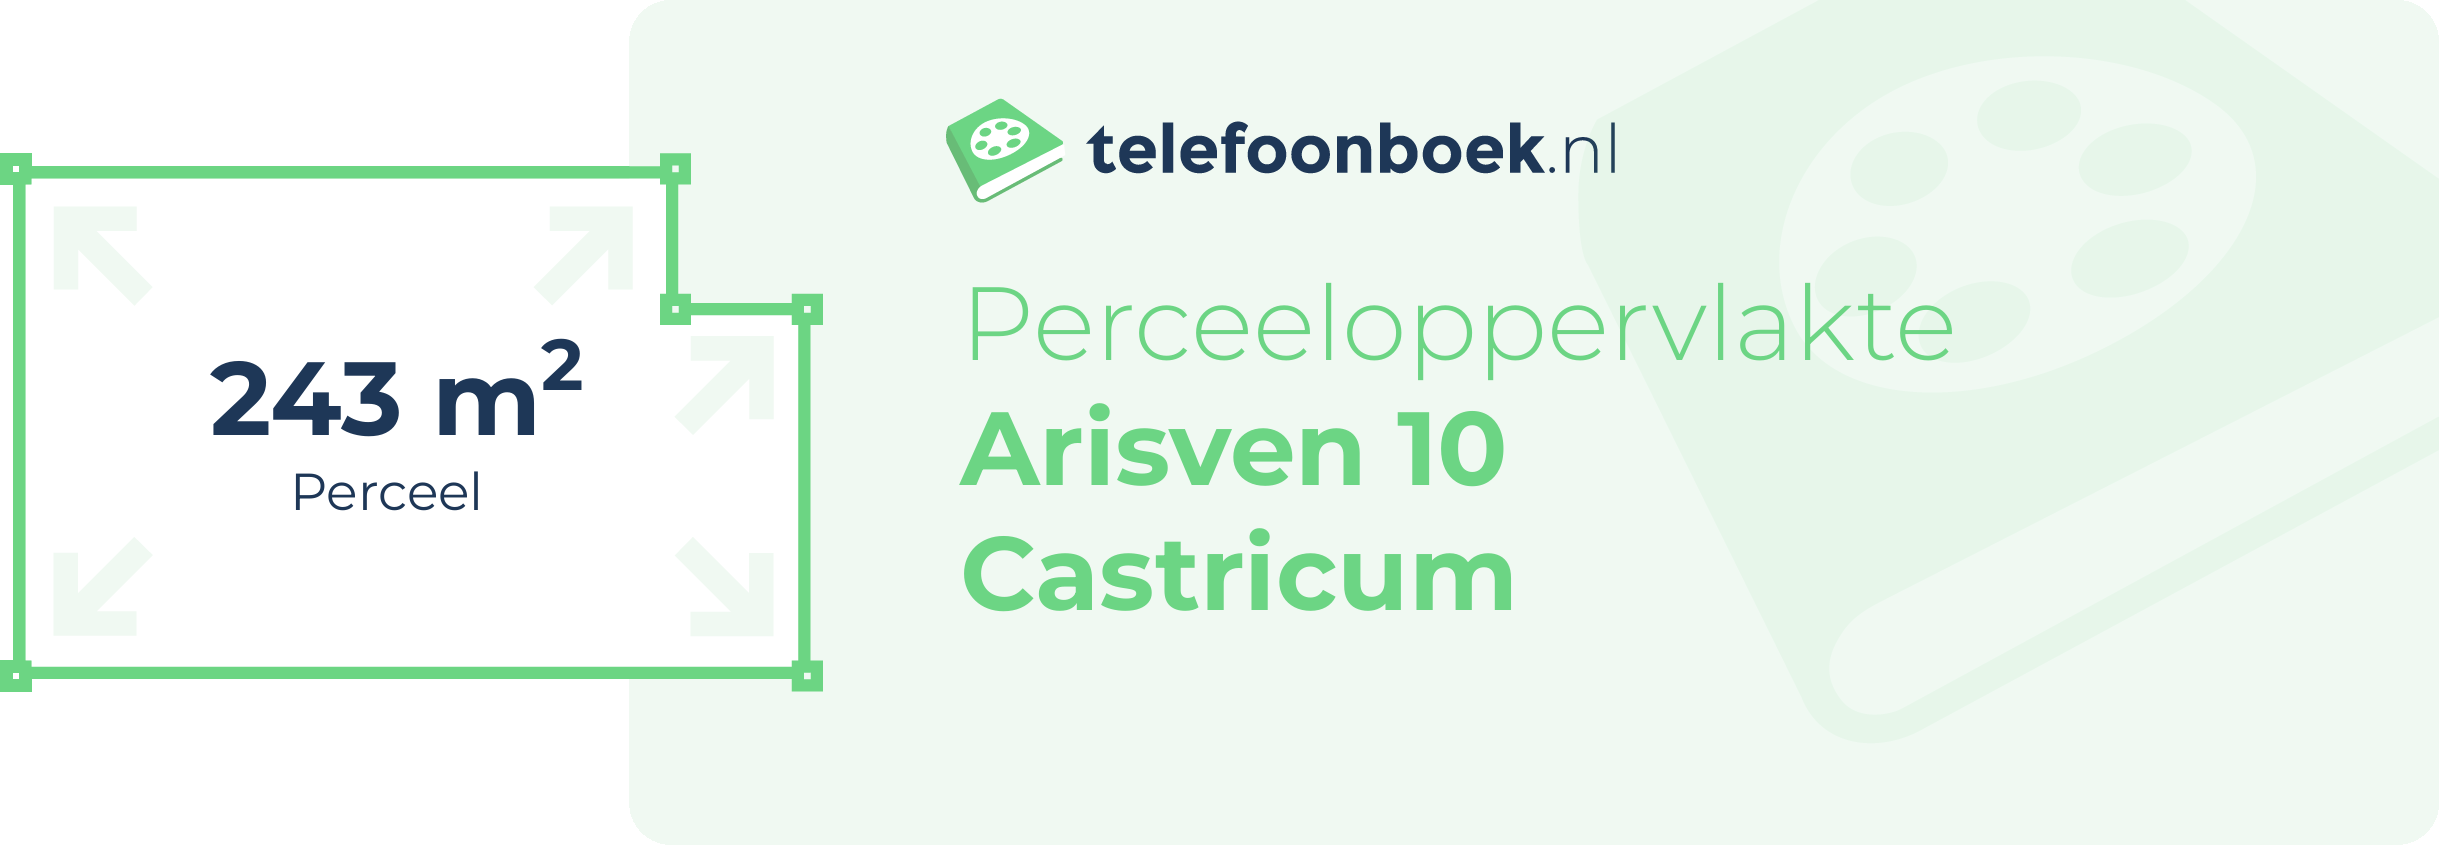 Perceeloppervlakte Arisven 10 Castricum